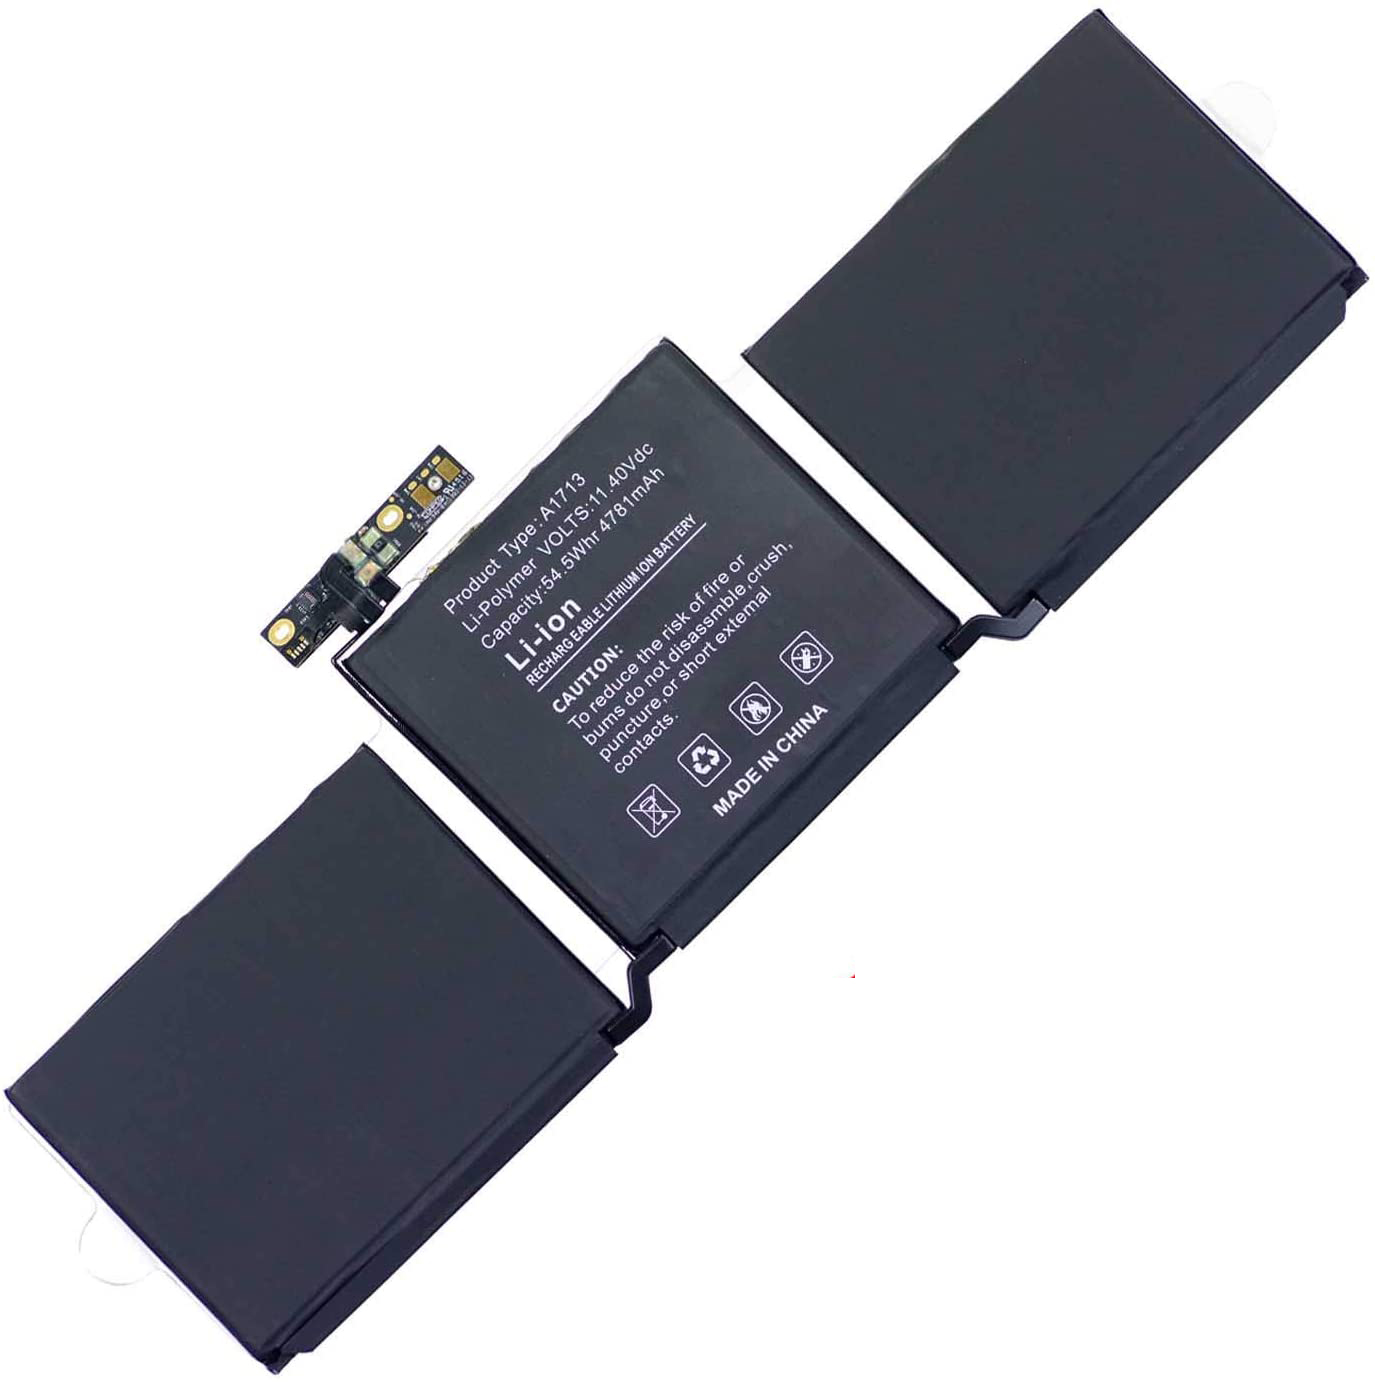 Best Seller OEM Manufacturer laptop battery lithium ion batteries A1713 for the Apple MacBook Pro A1708 model black series